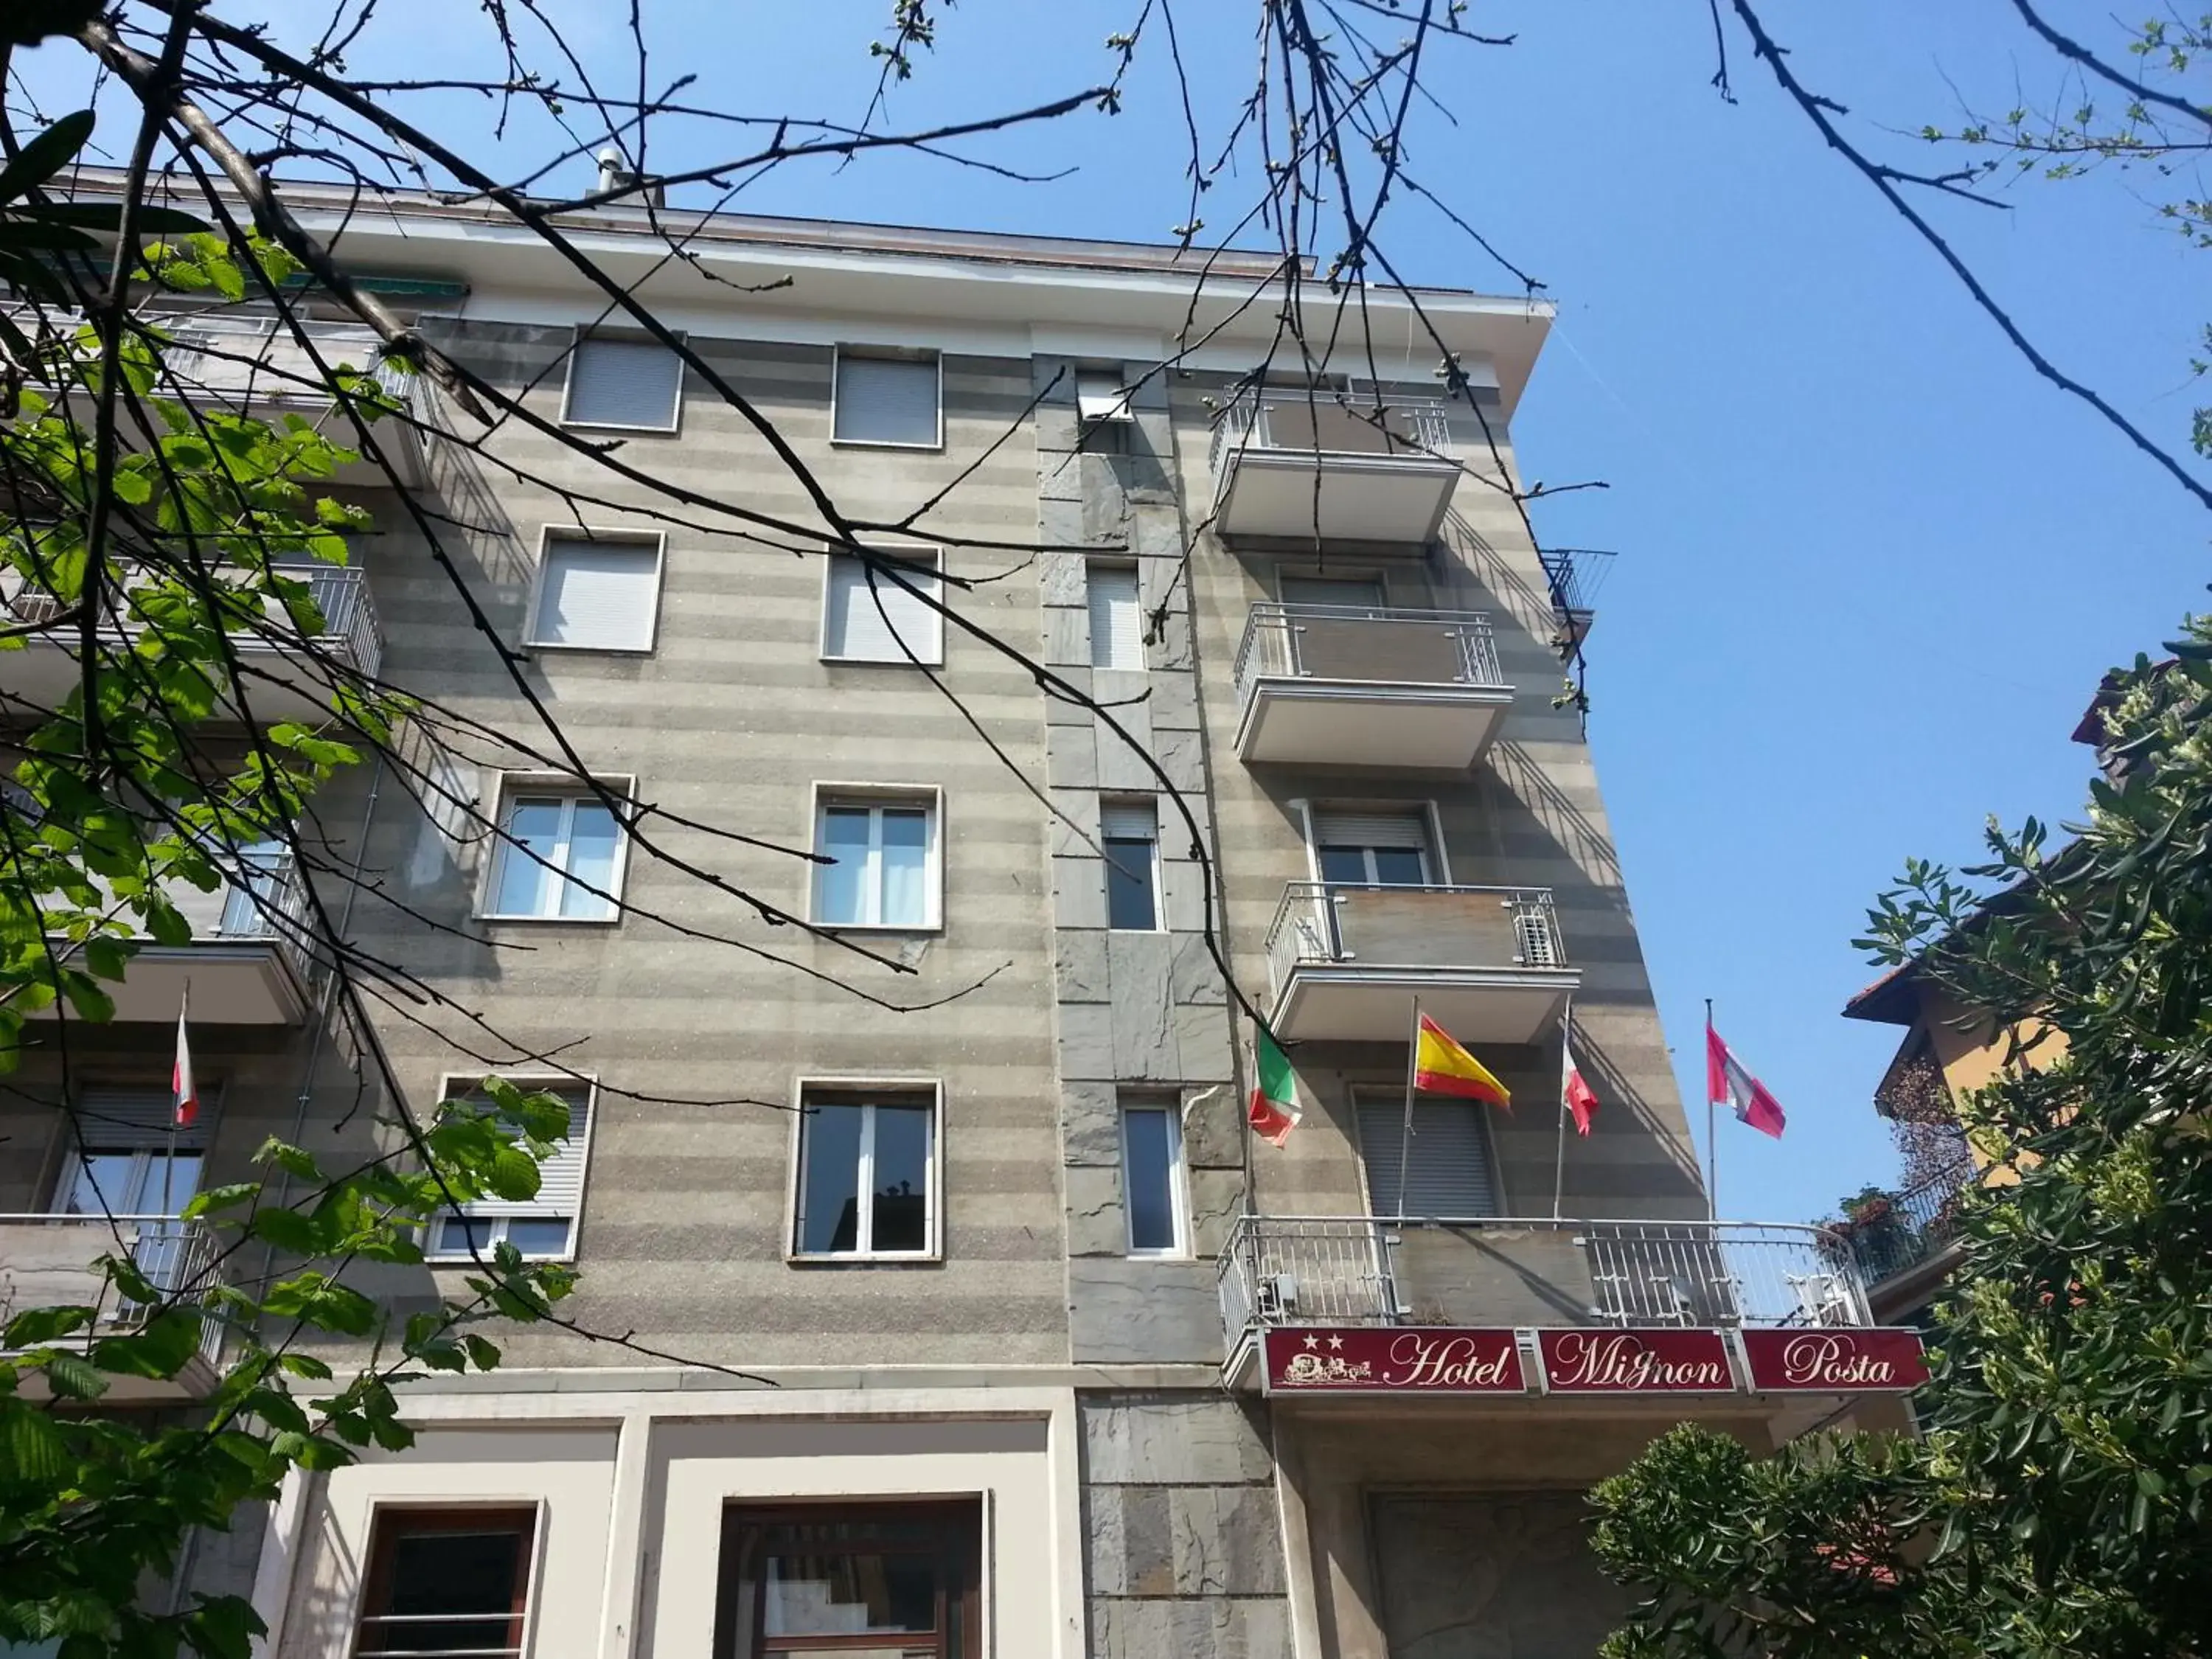 Facade/entrance, Property Building in Hotel Mignon Posta